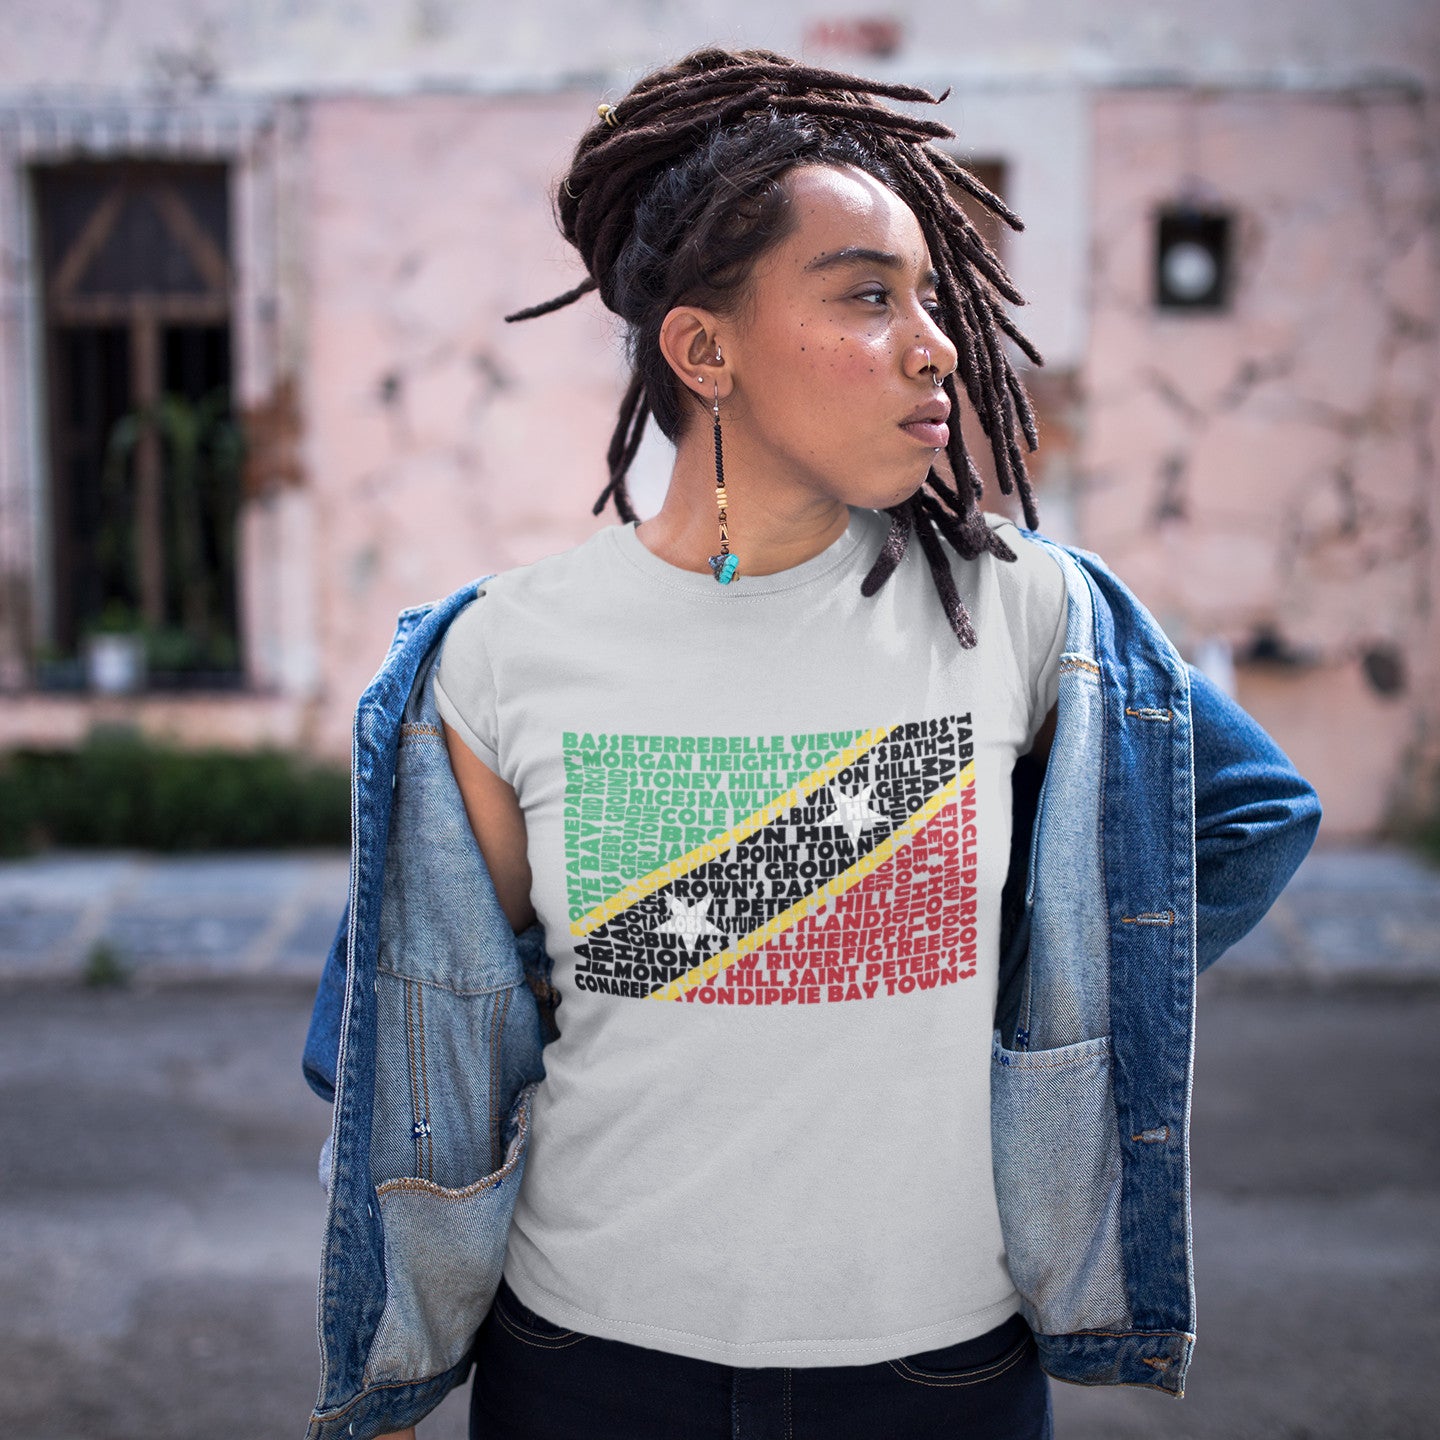 St. Kitts and Nevis Stencil - Women's short sleeve t-shirt